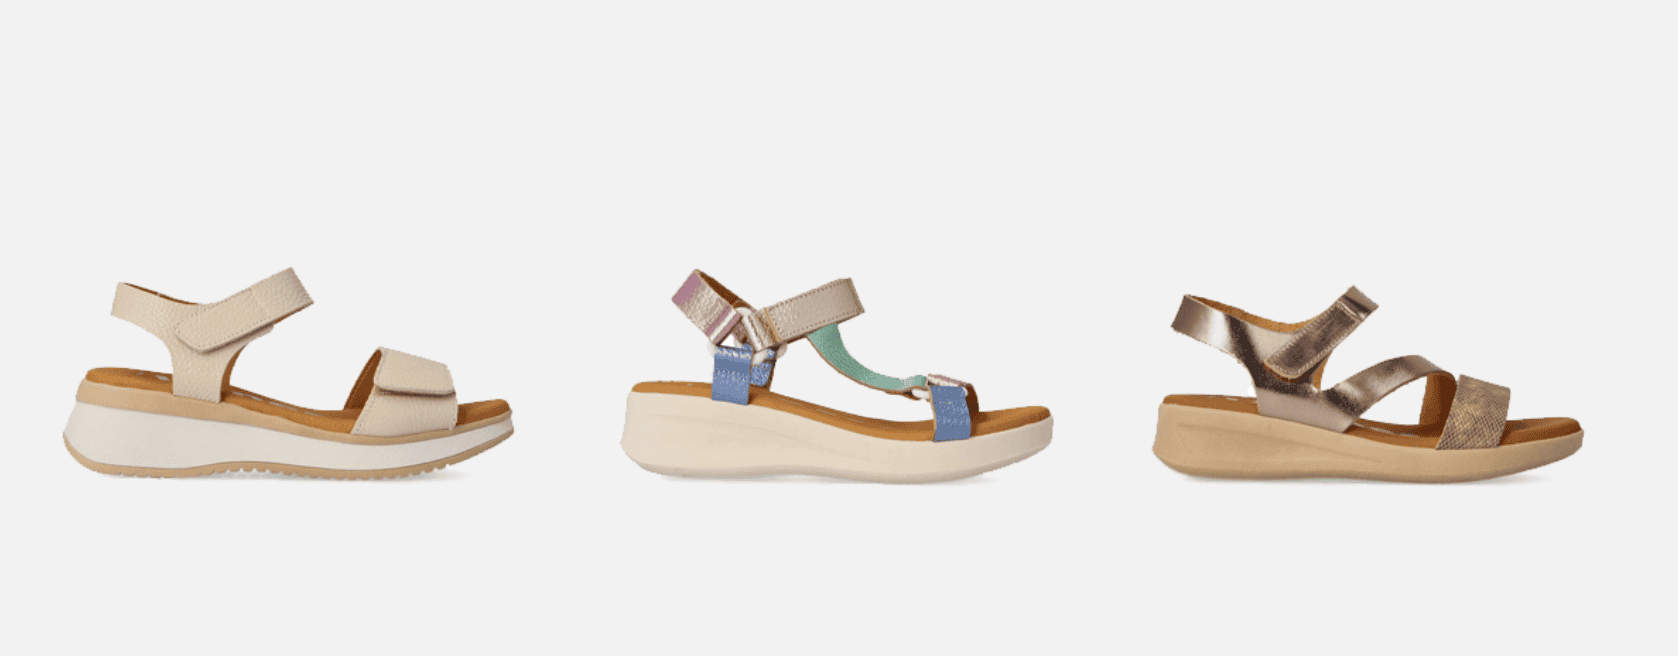 Sandalias plataforma mujer vanessa calzados zapatos verano